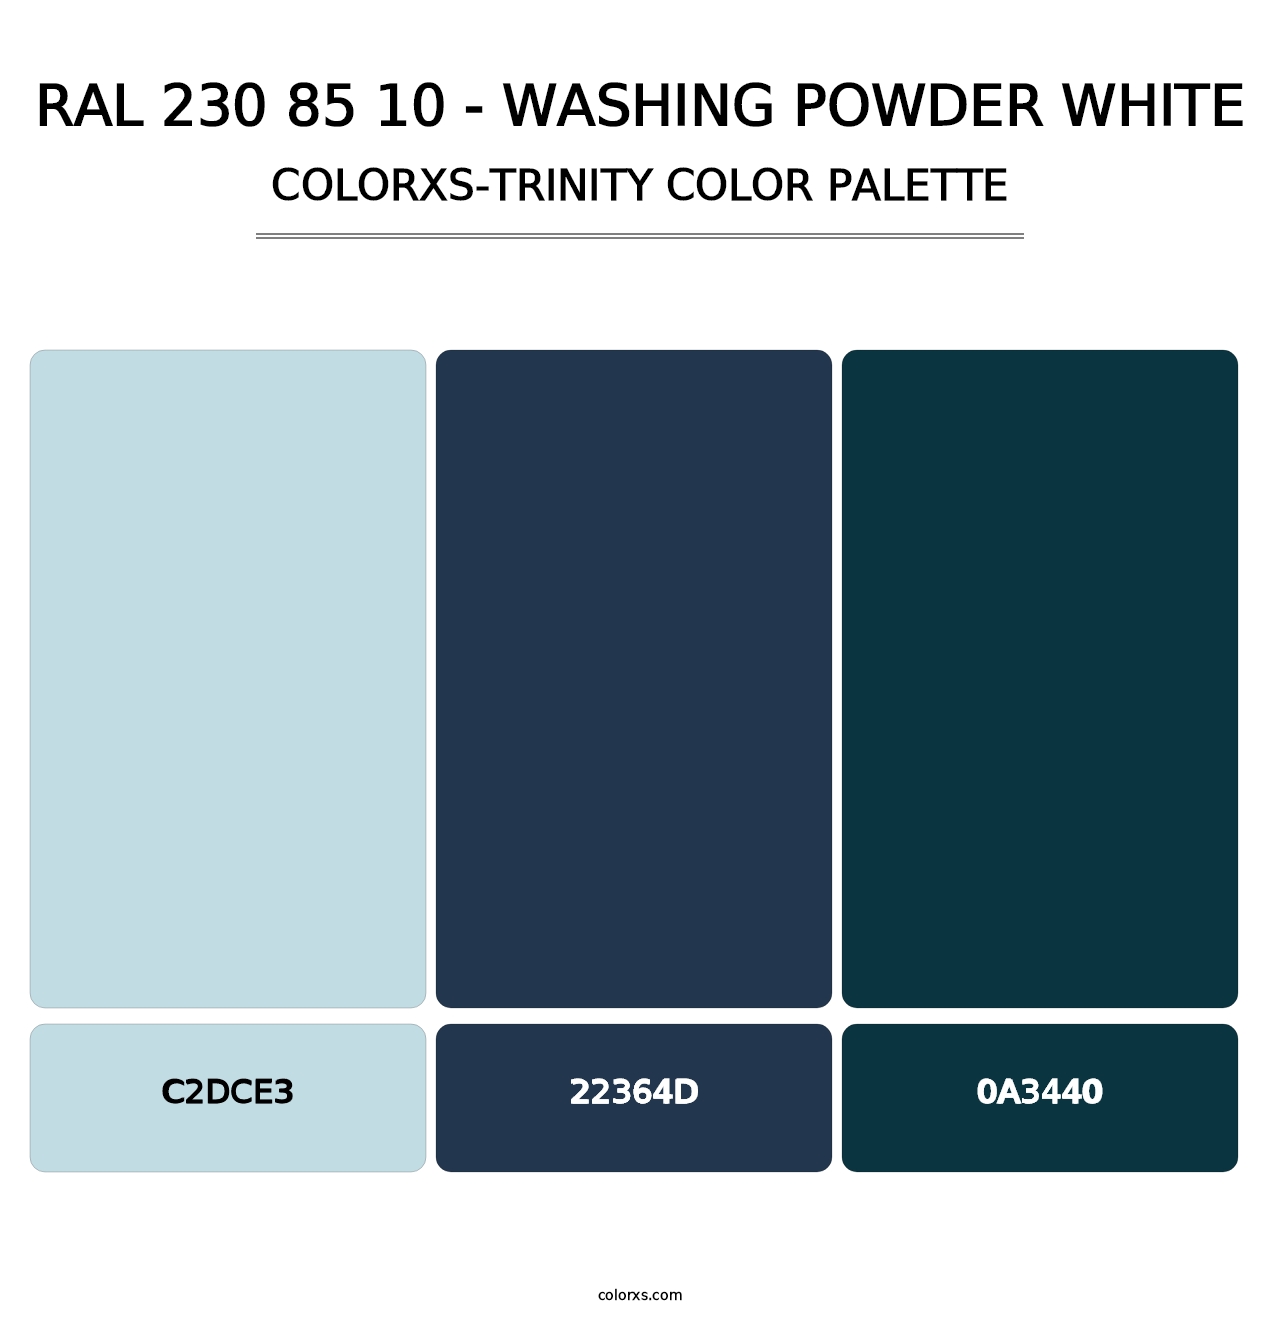 RAL 230 85 10 - Washing Powder White - Colorxs Trinity Palette